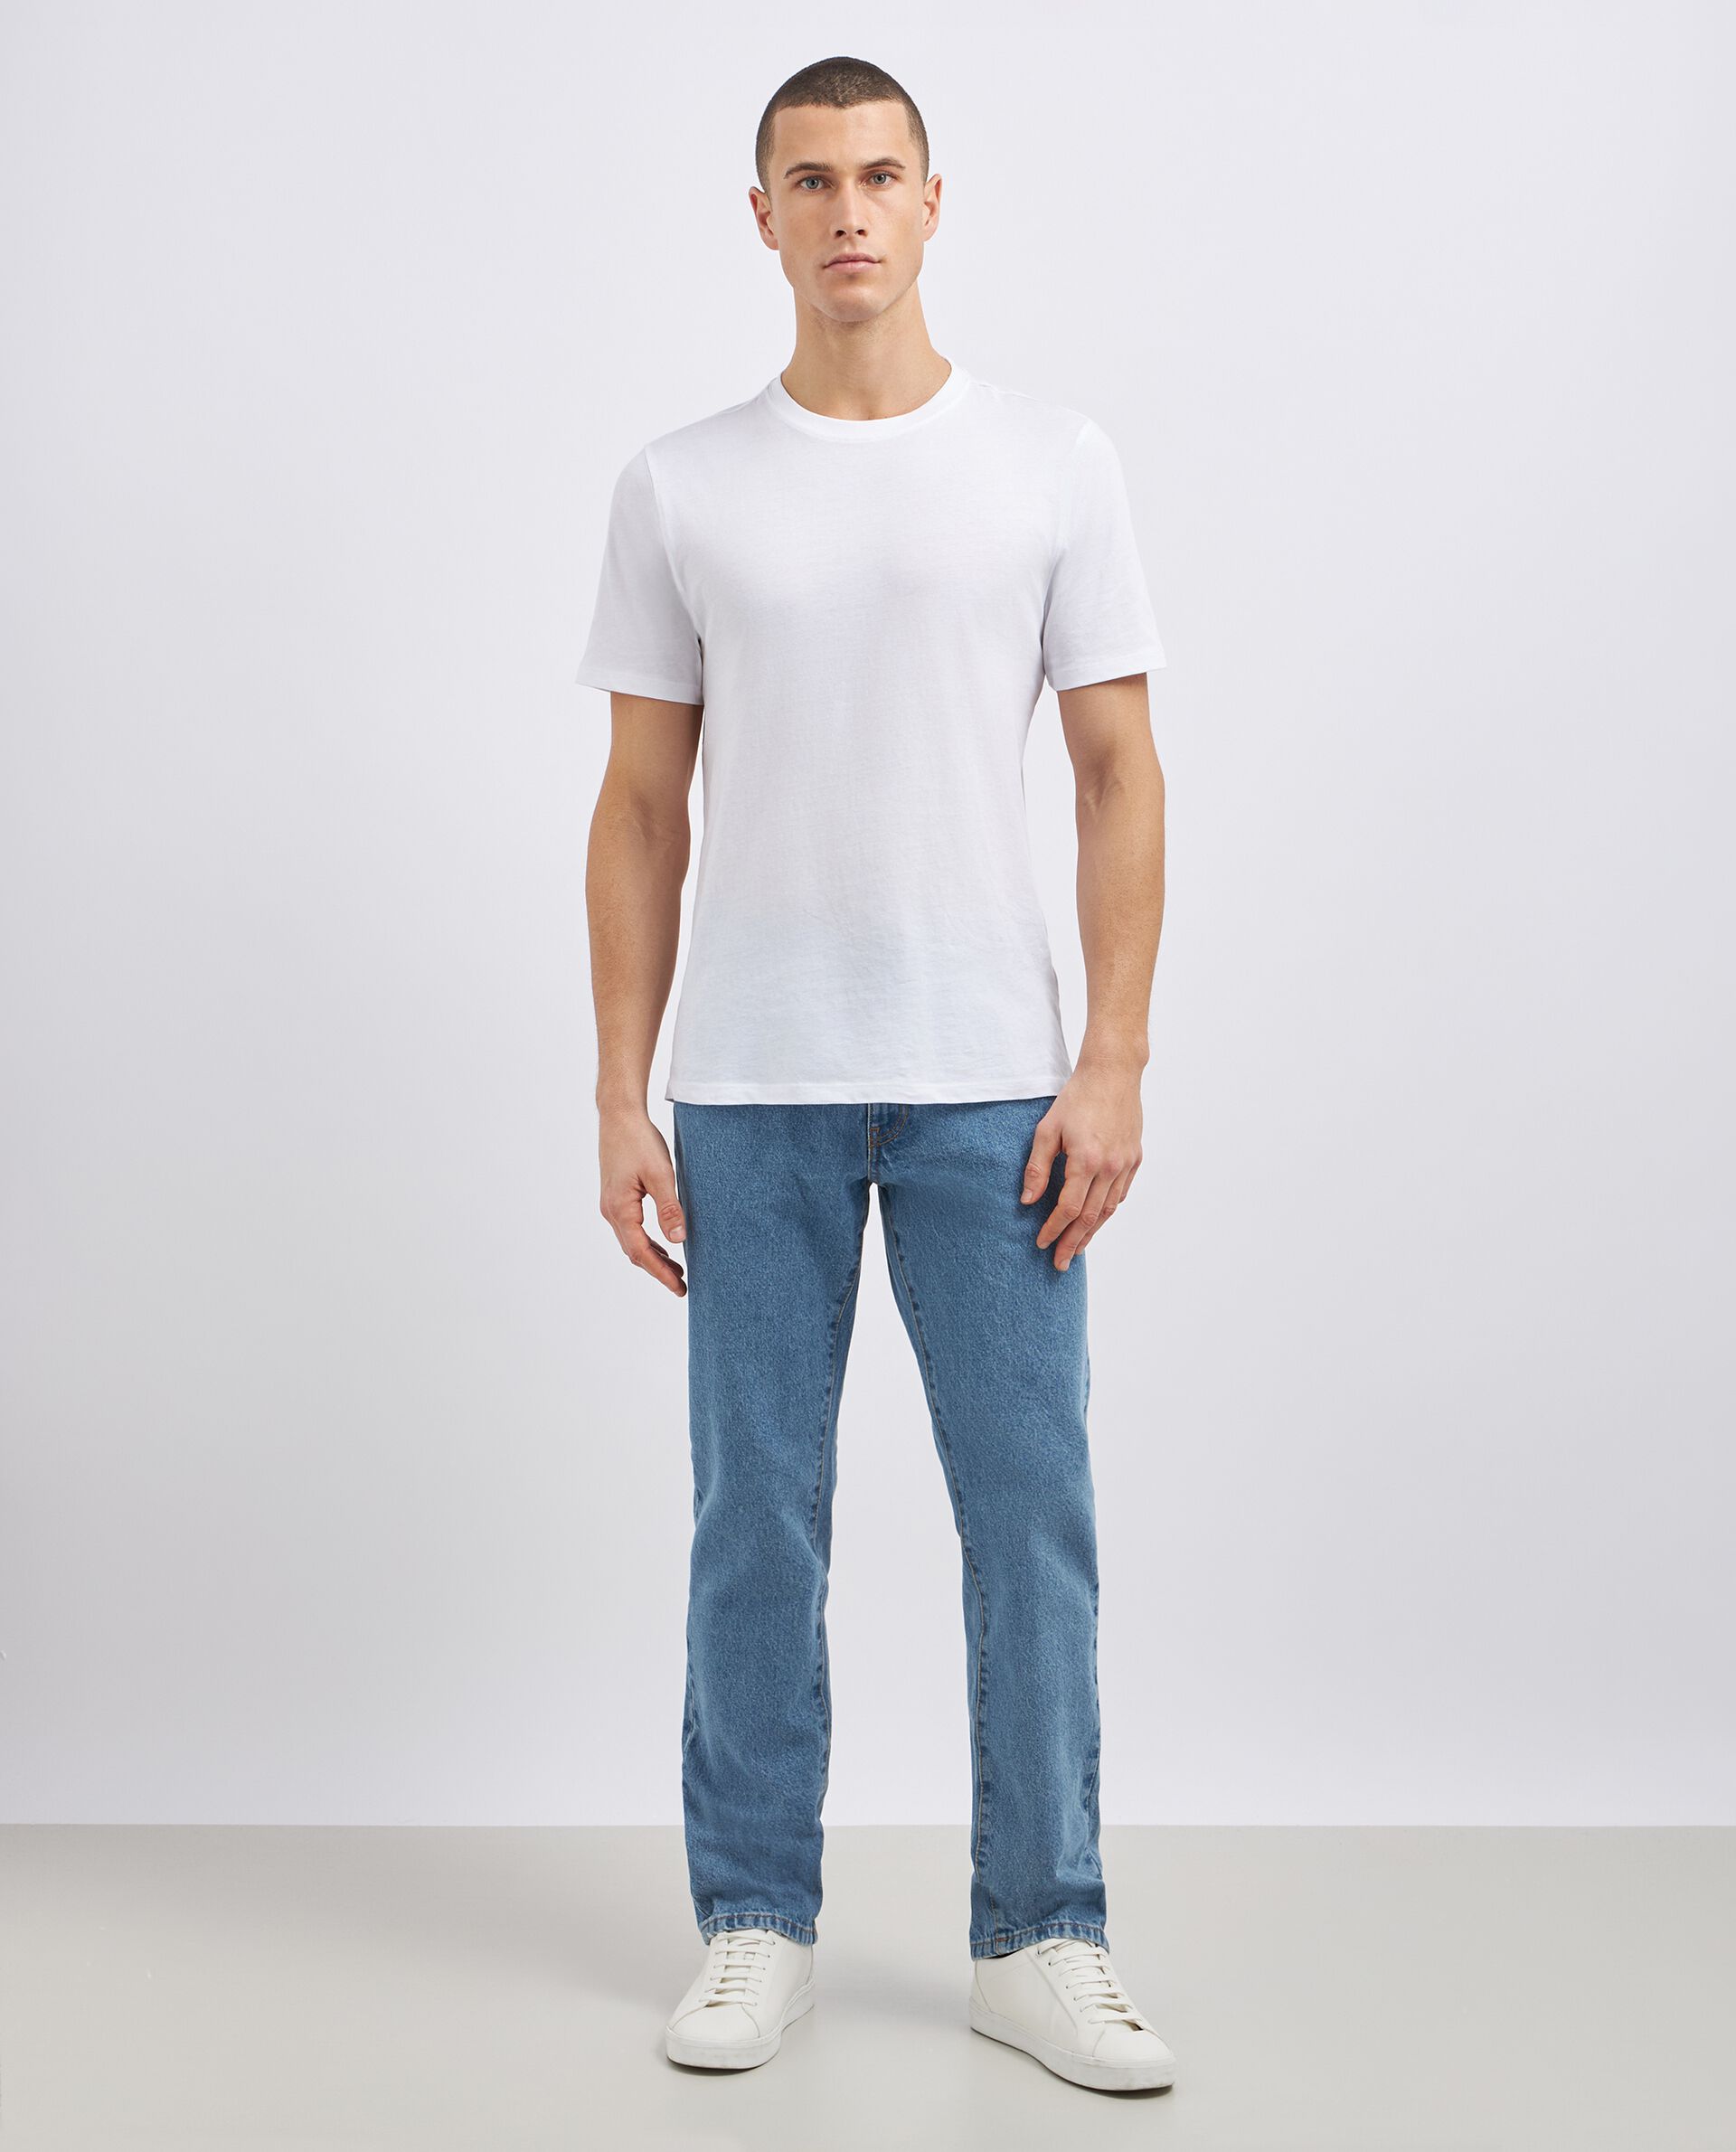 Jeans regular fit in puro cotone uomo